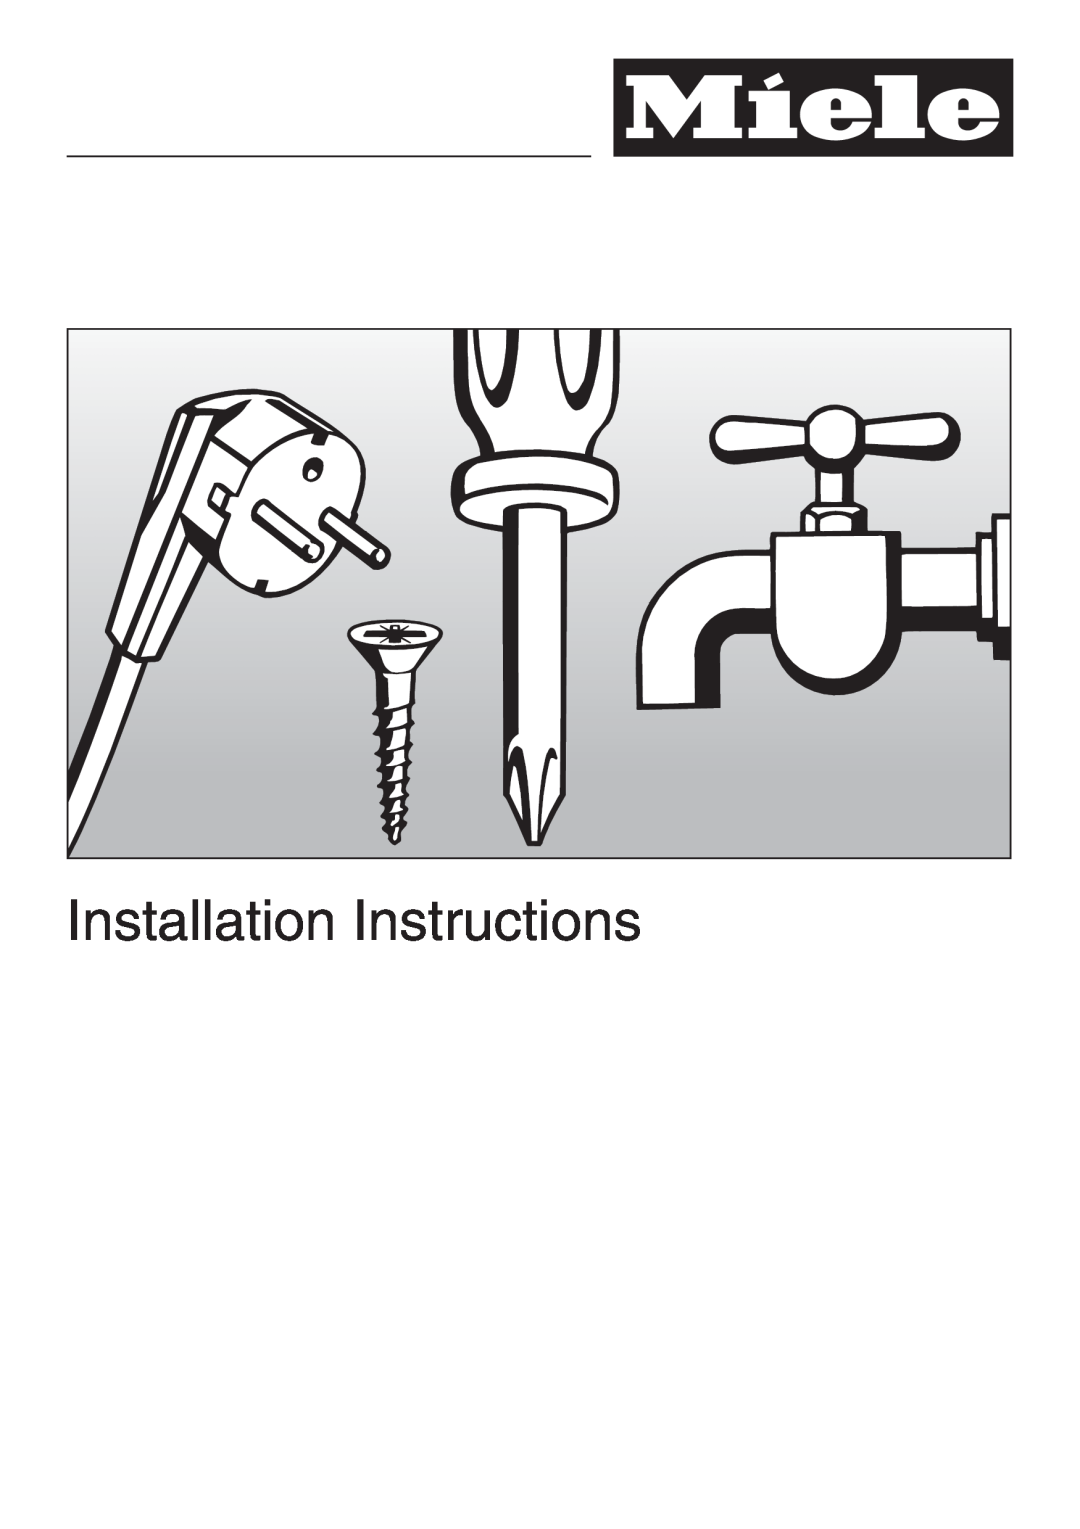 Miele DA 5100 D installation instructions Installation Instructions 